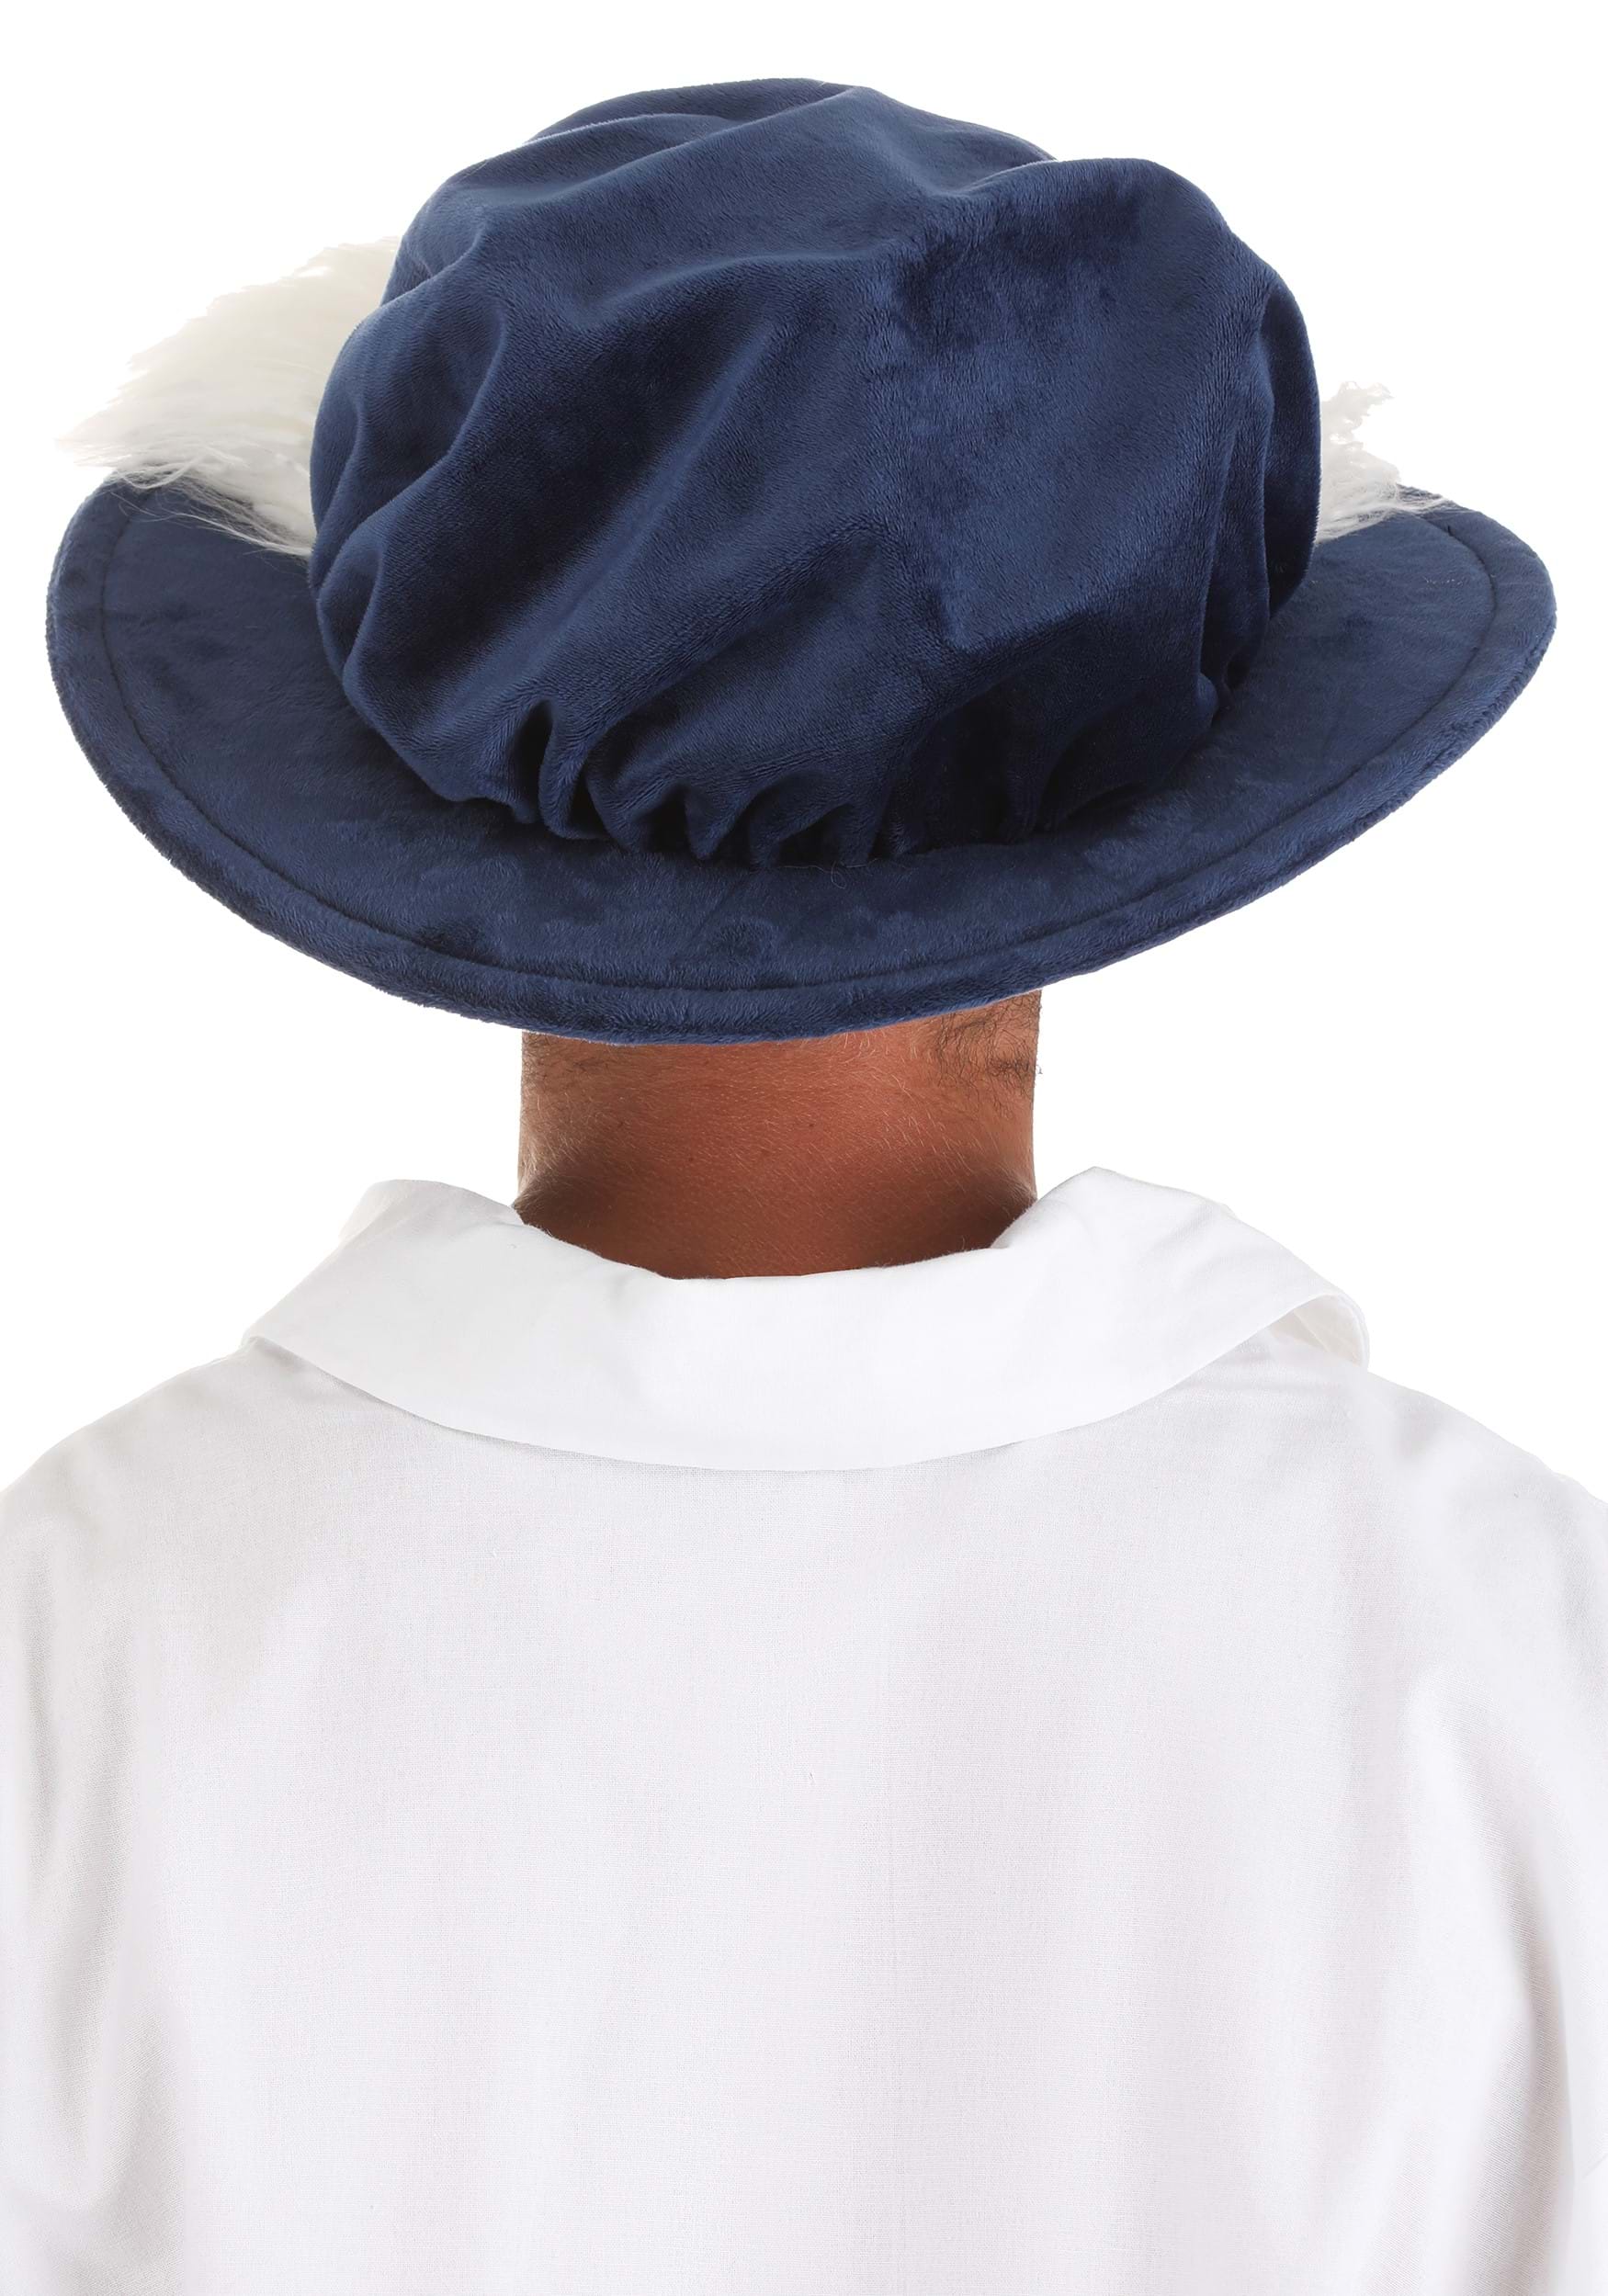 Disney Prince Charming Blue Hat